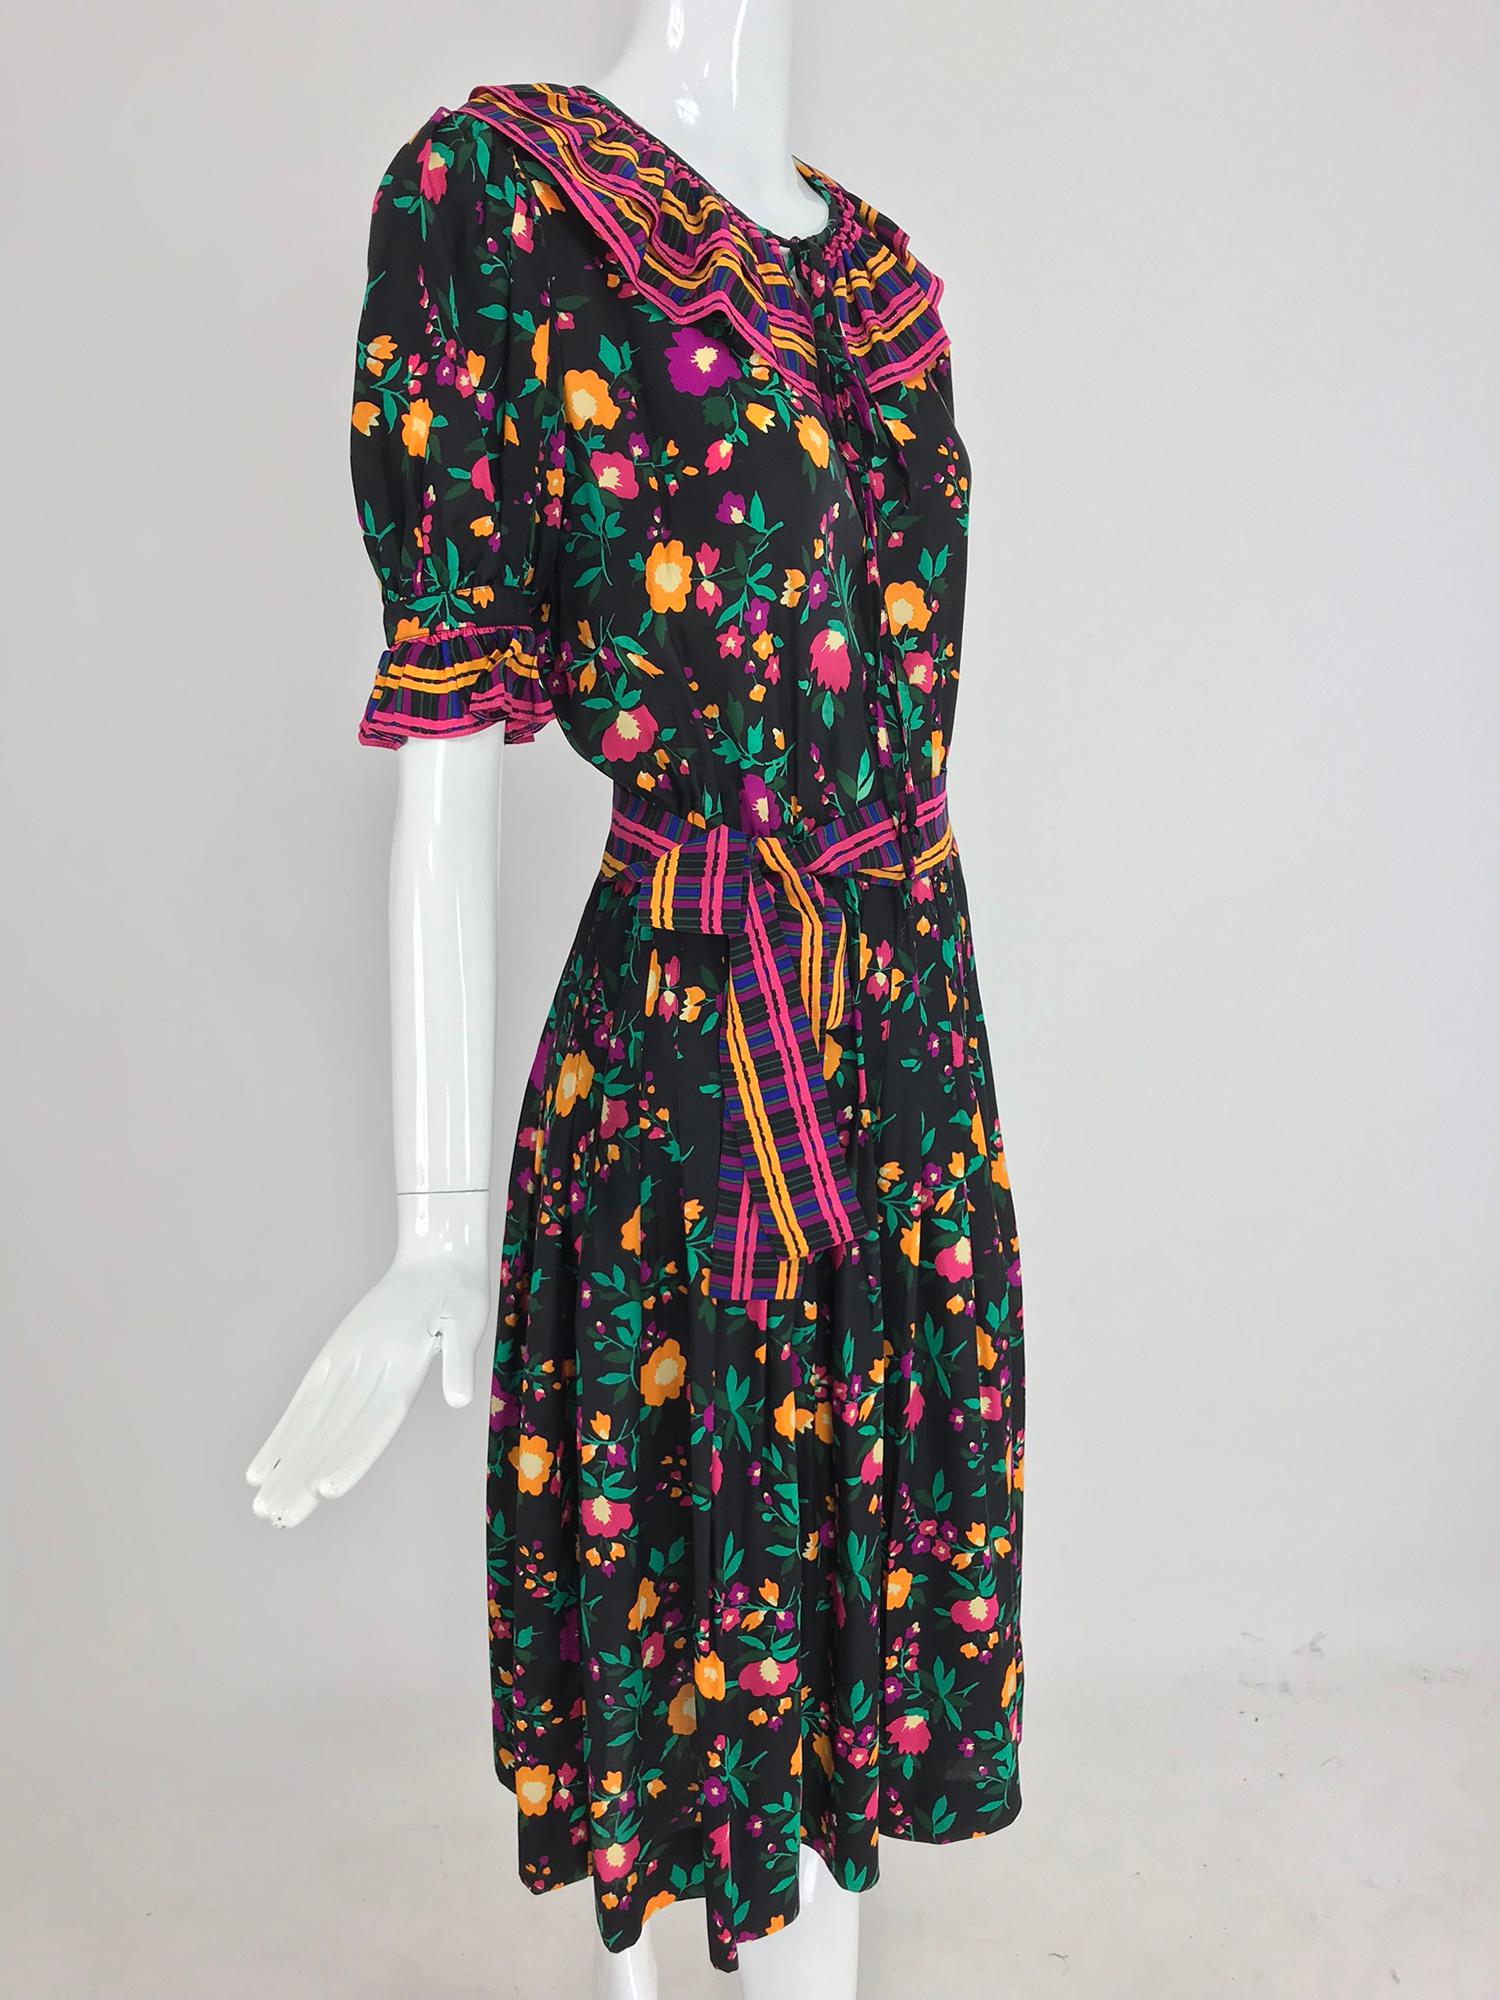 Yves Saint Laurent Rive Gauche floral silk mix print dress 1970s 6